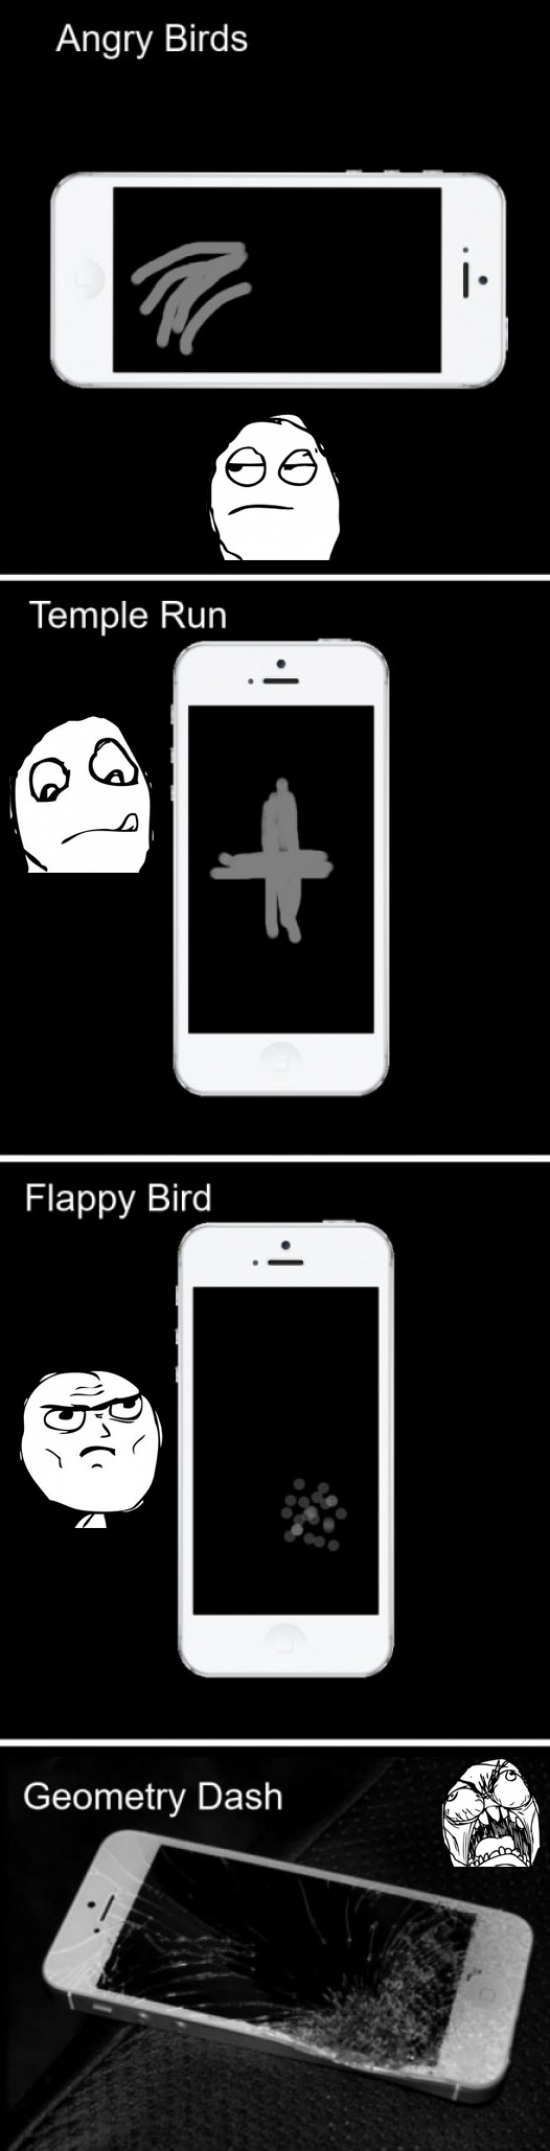 angry birds,flappy bird,geometry dash,huellas,juegos,marcas,mobil,roto,smartphone,telefono,temple run